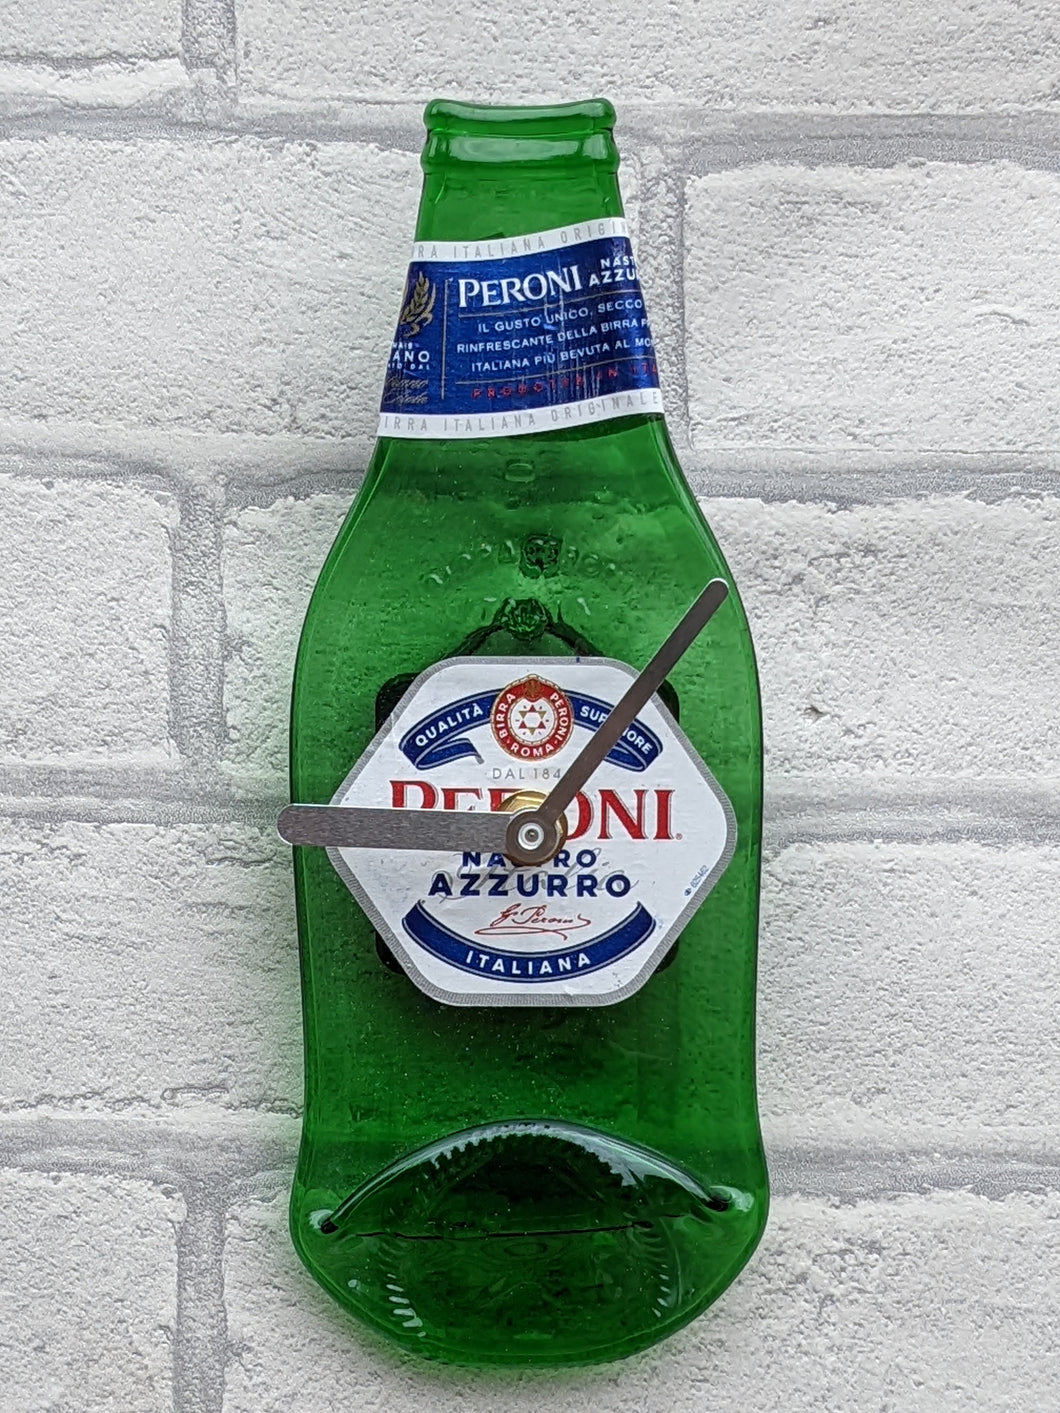 Peroni beer bottle clock